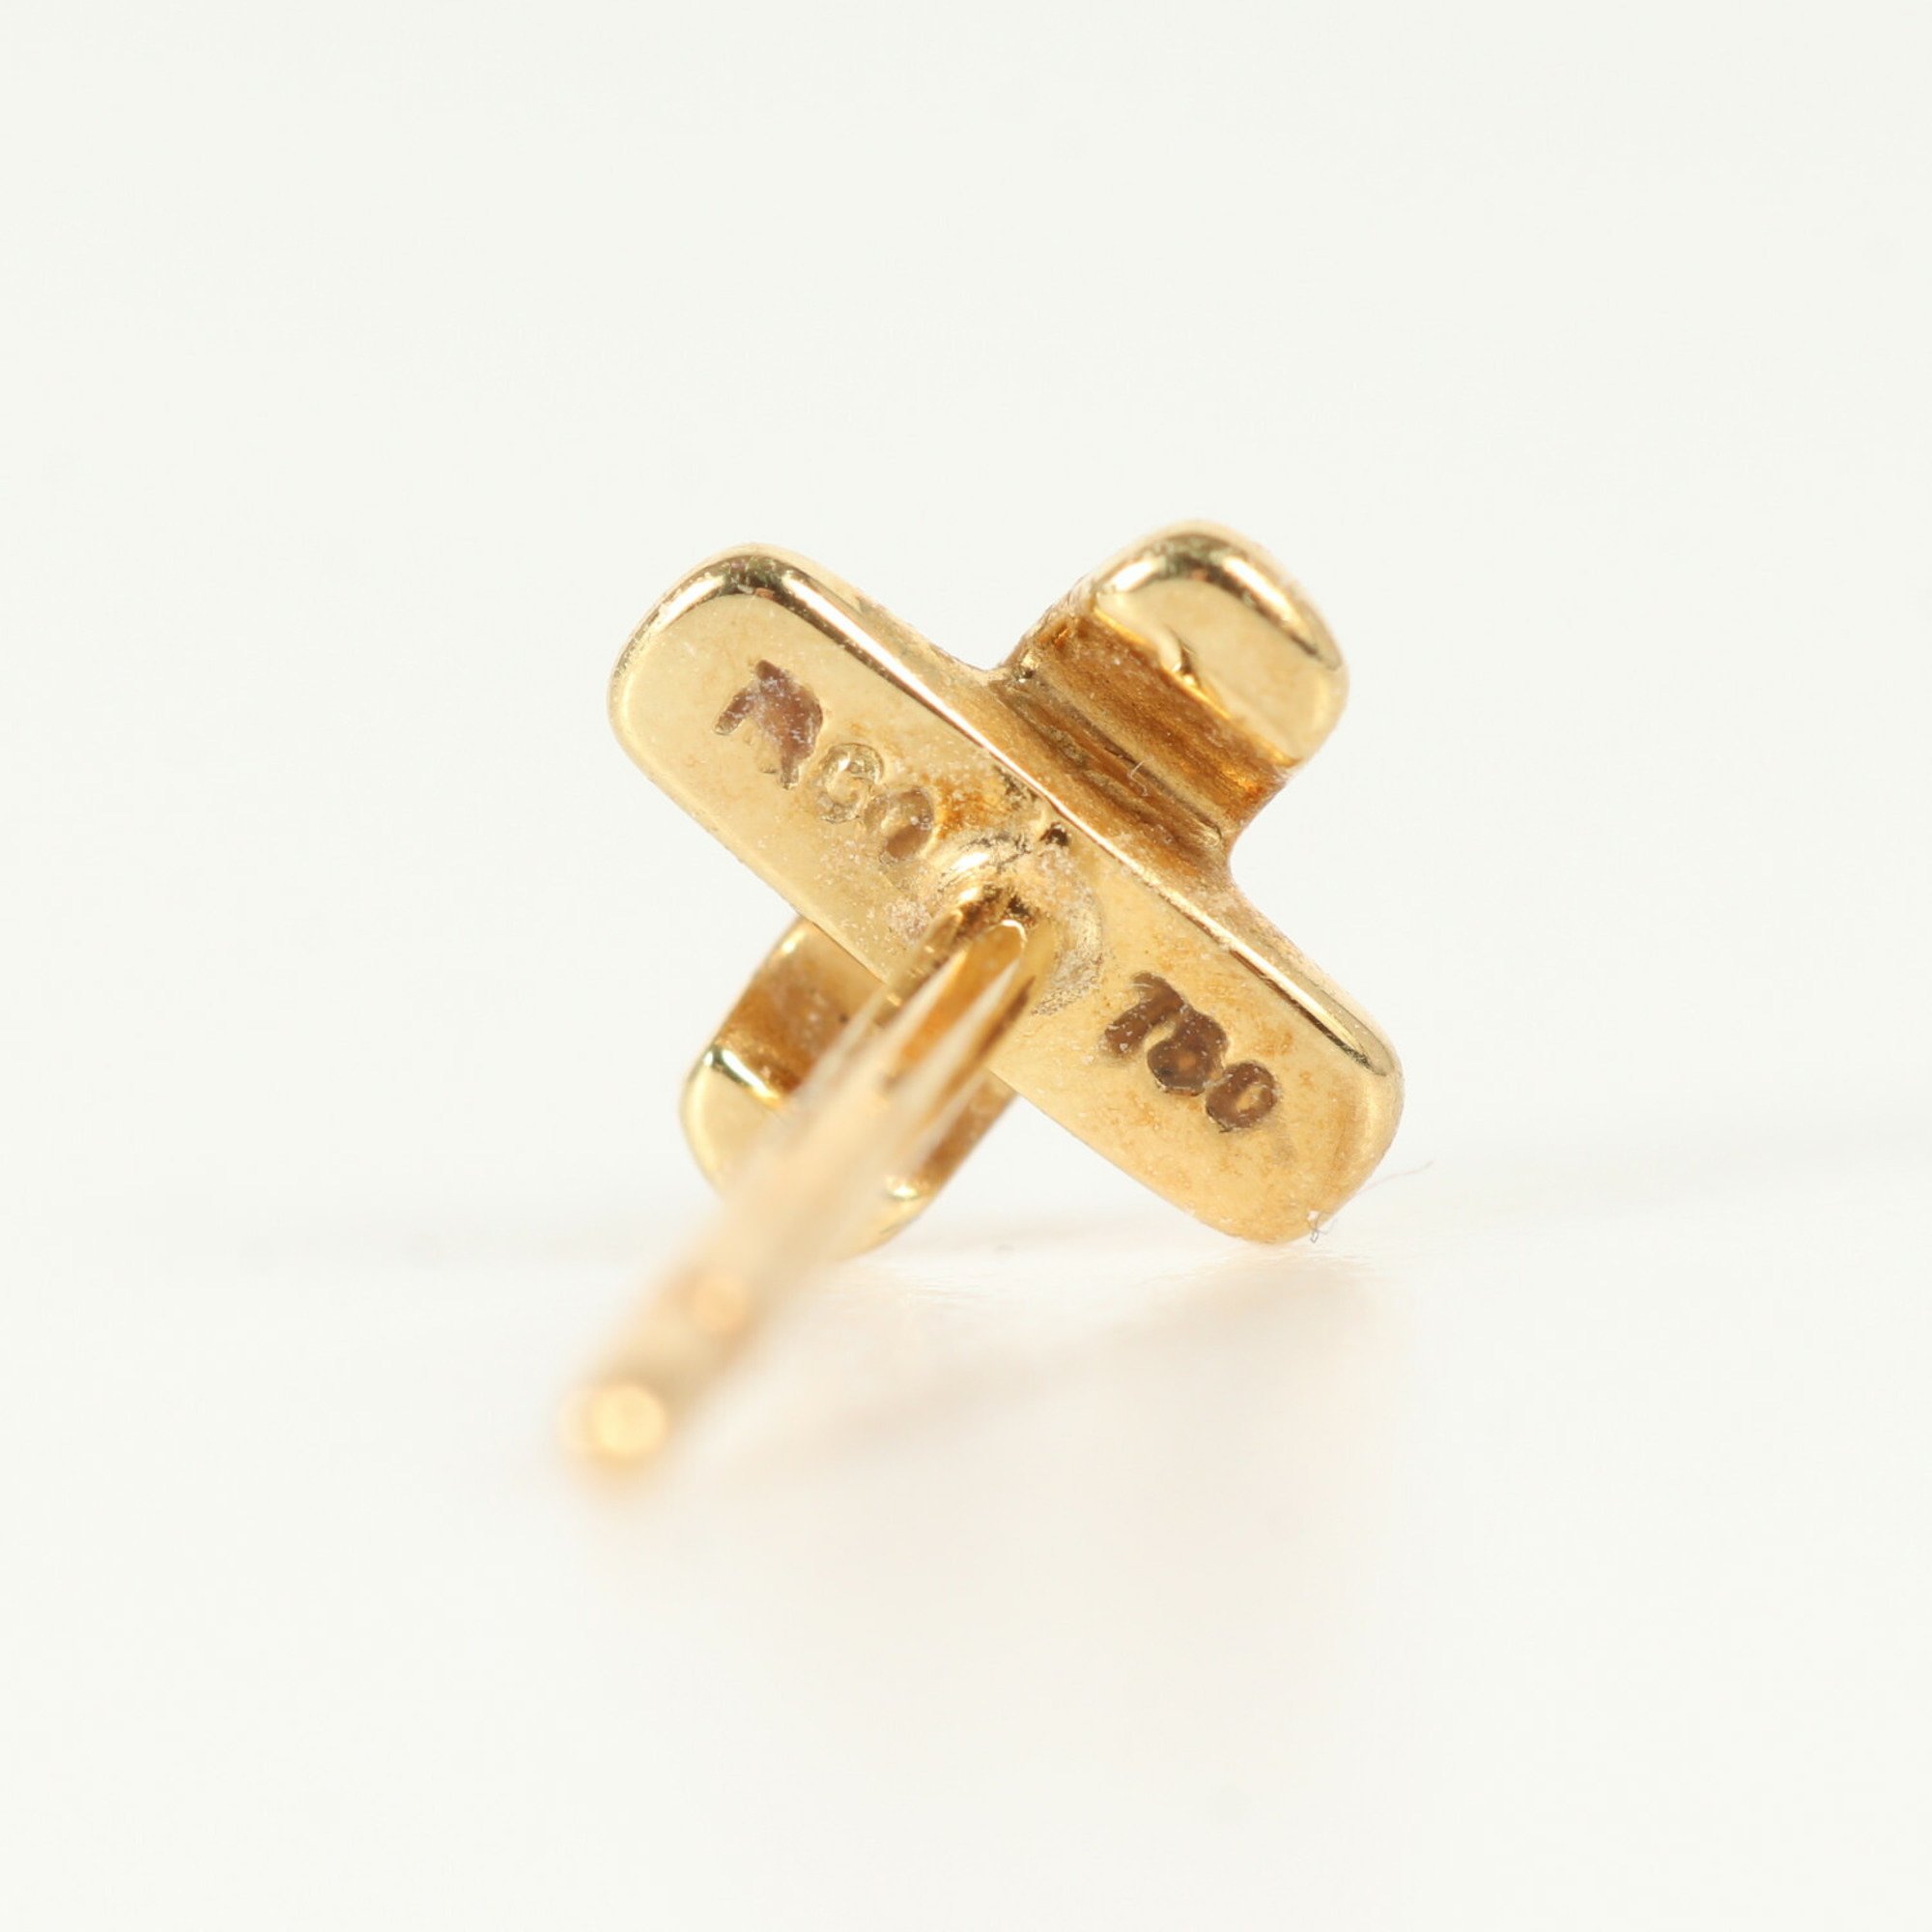 TIFFANY&Co. Tiffany Signature Cross Stitch Earrings AU750 K18 Yellow Gold High Luxury Men's